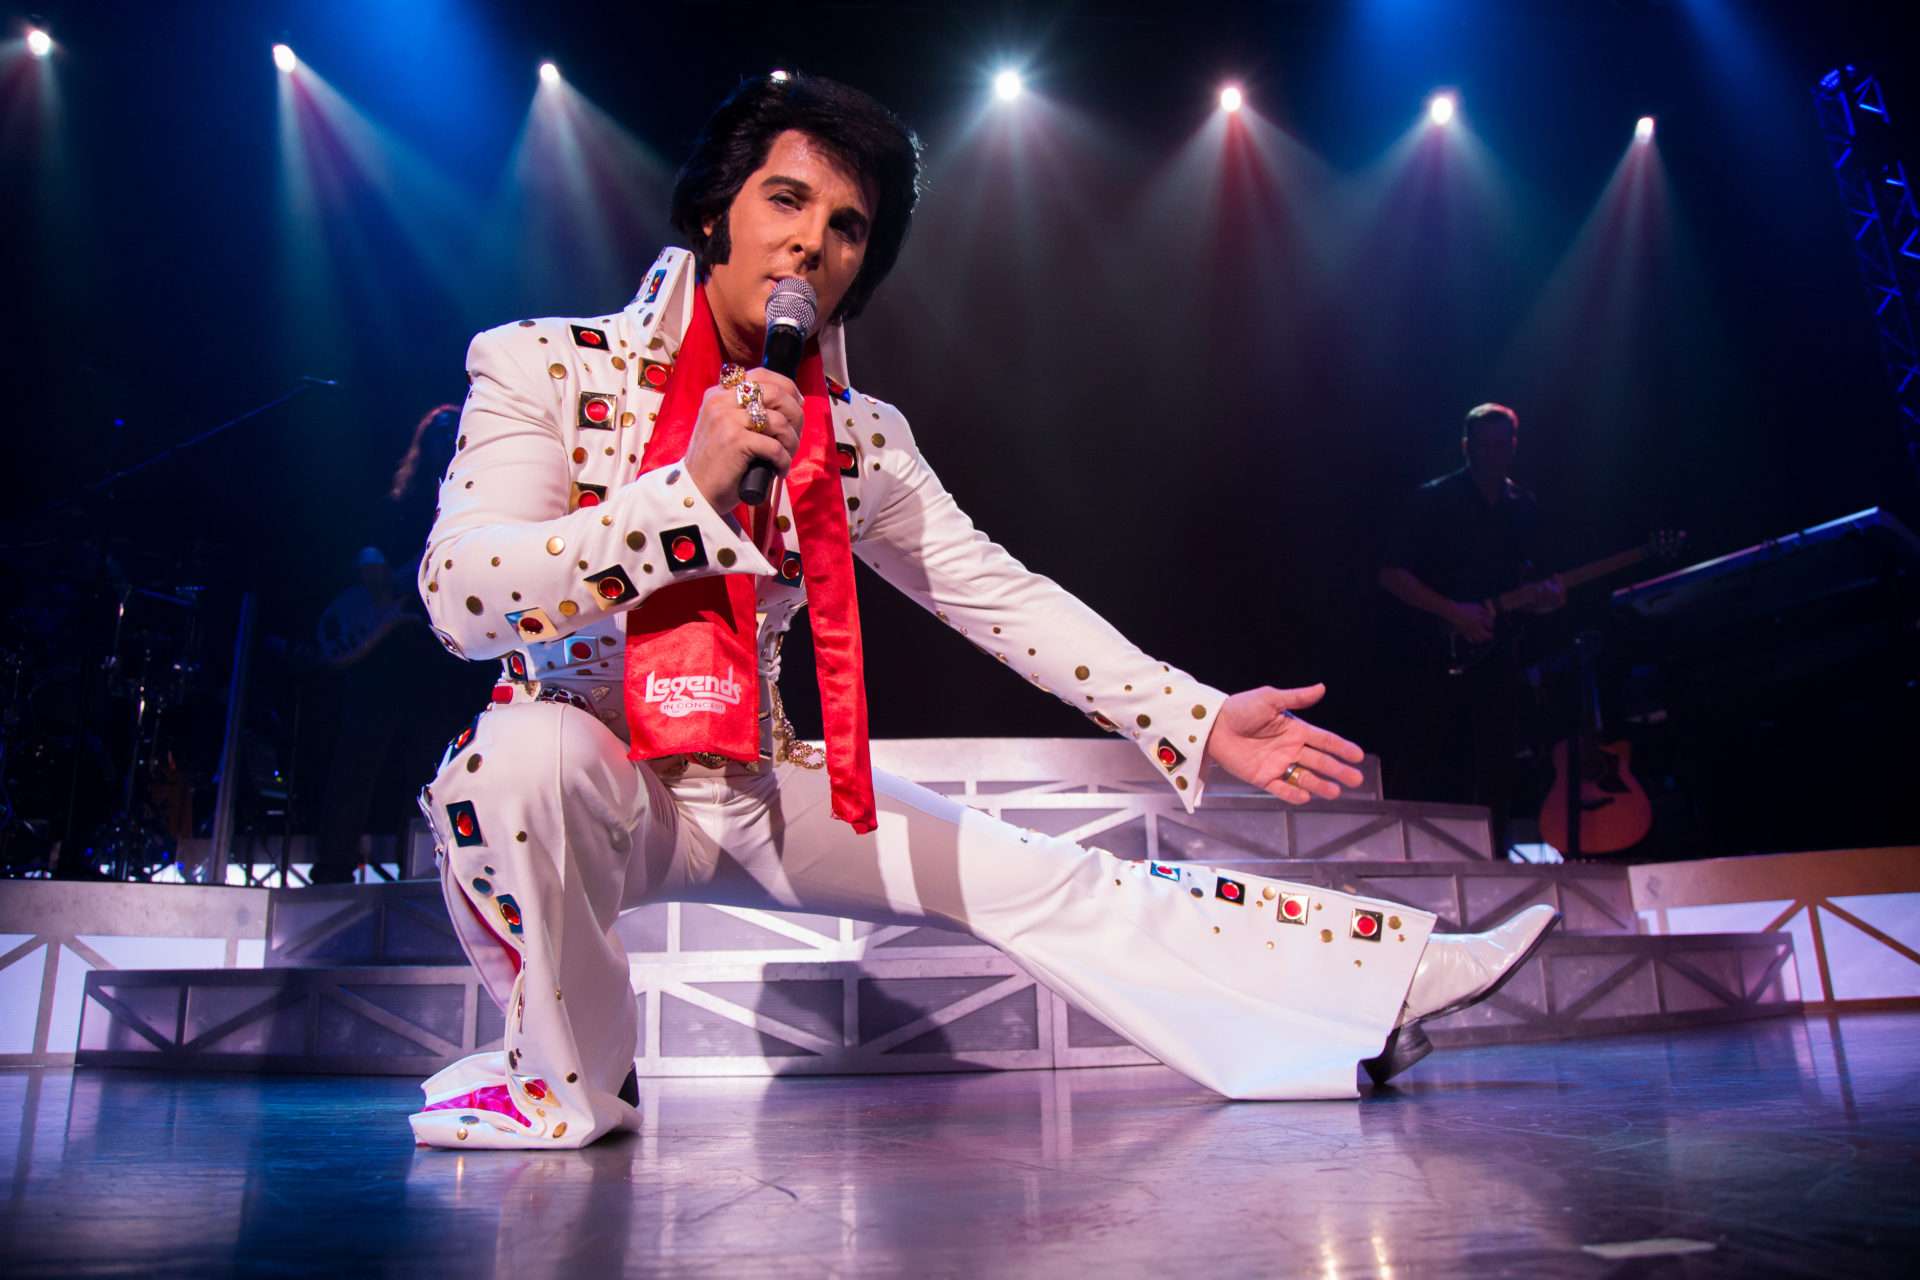 Legends in Concert Jay Dupuis as Elvis Presley